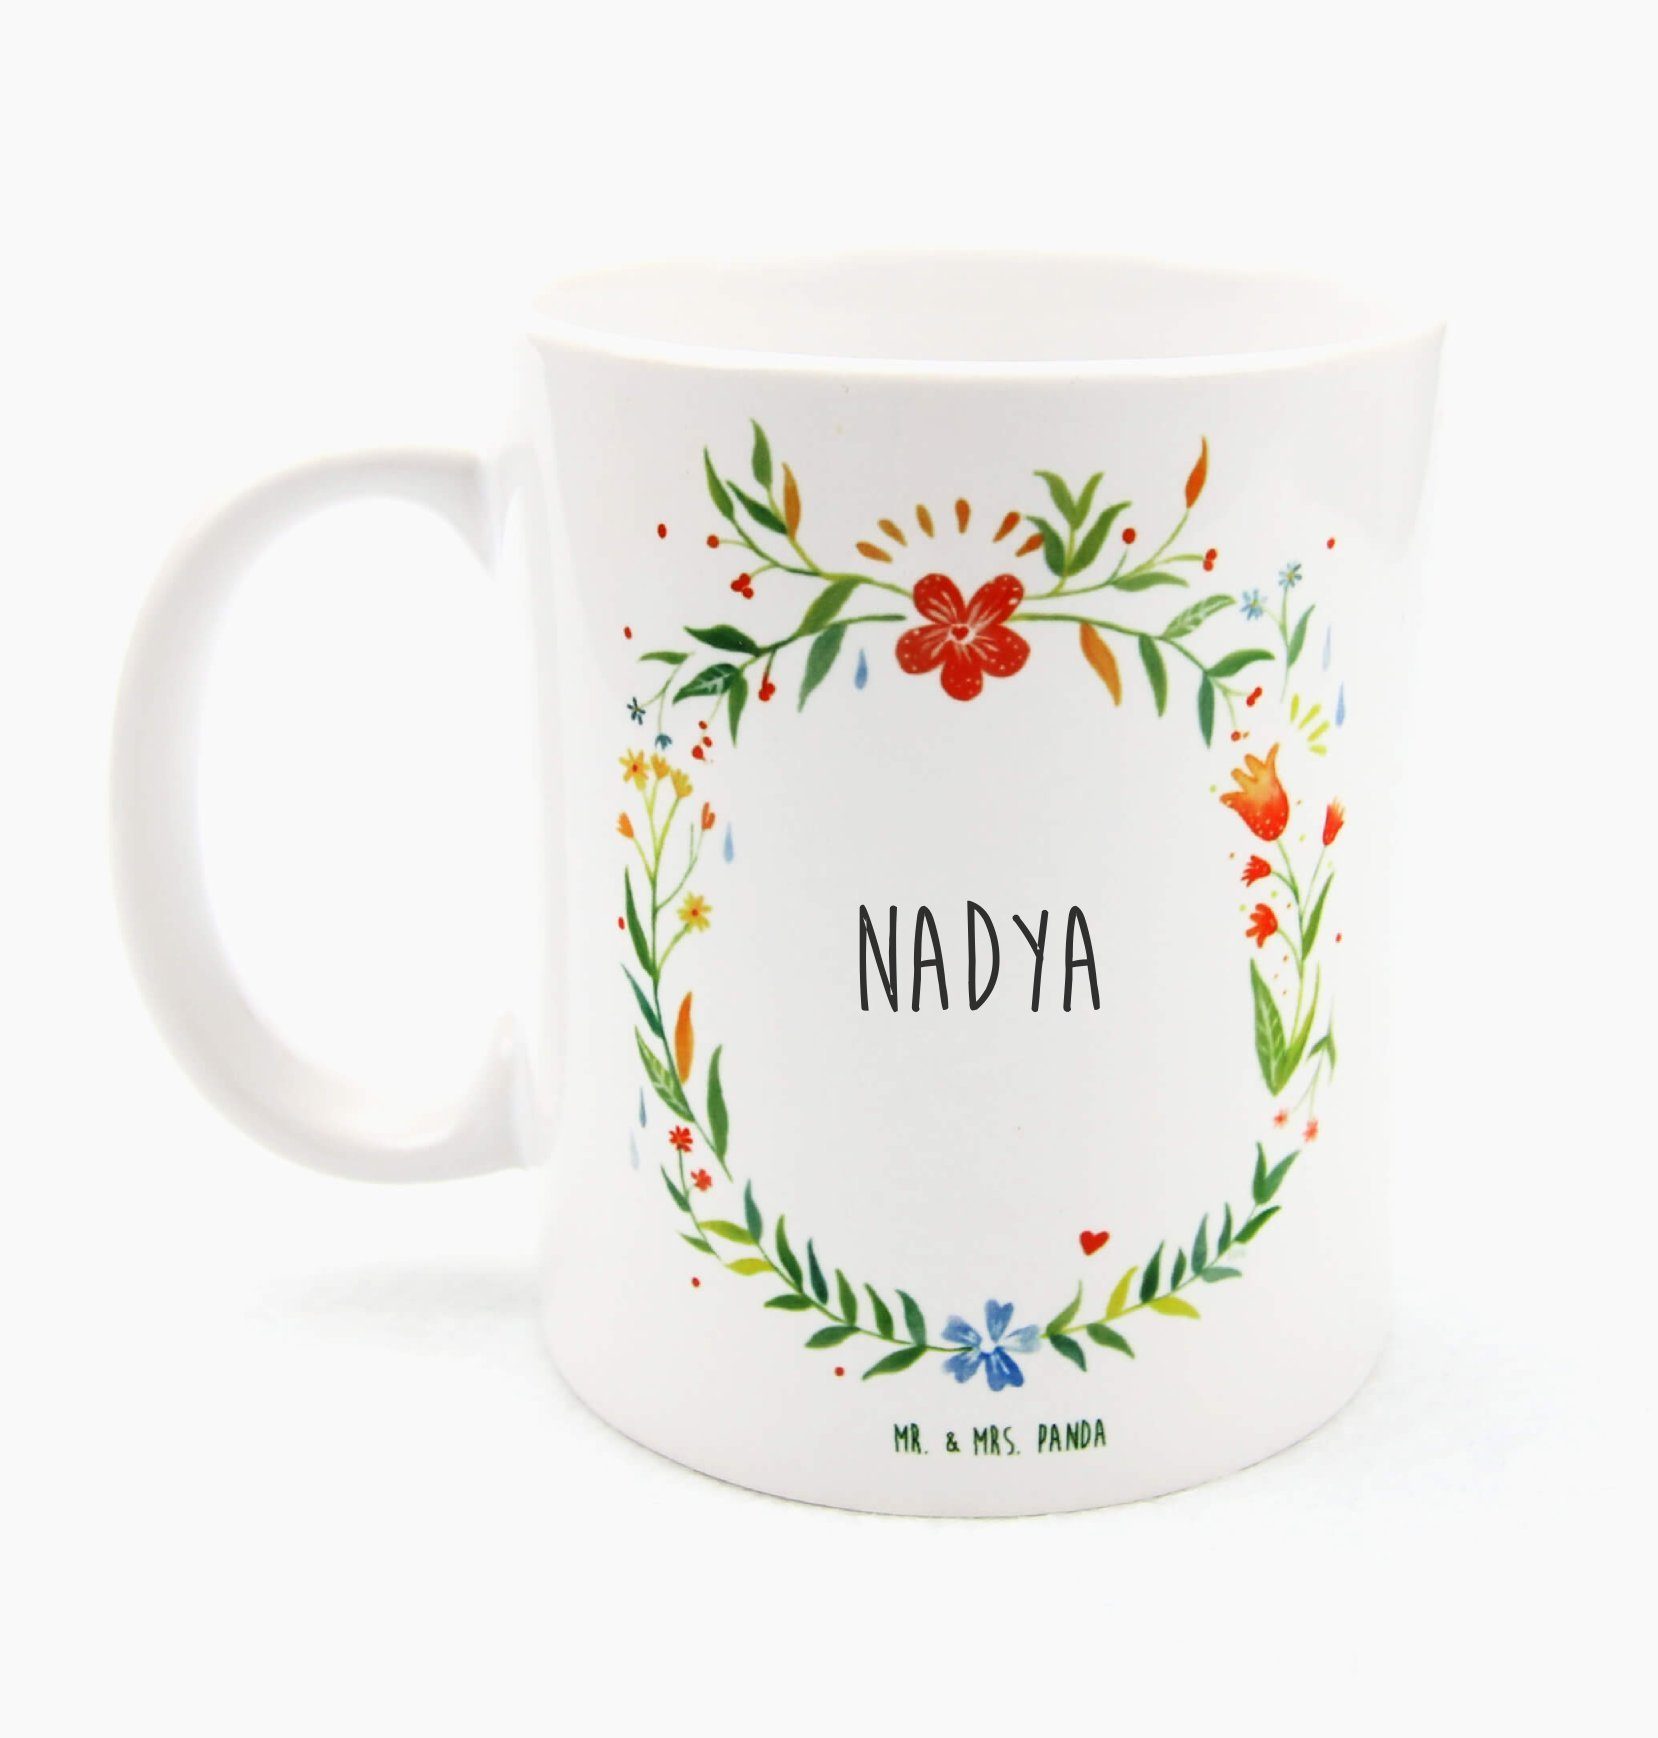 Mr. & Mrs. Panda Tasse Nadya - Geschenk, Teebecher, Geschenk Tasse, Büro Tasse, Kaffeetasse, Keramik